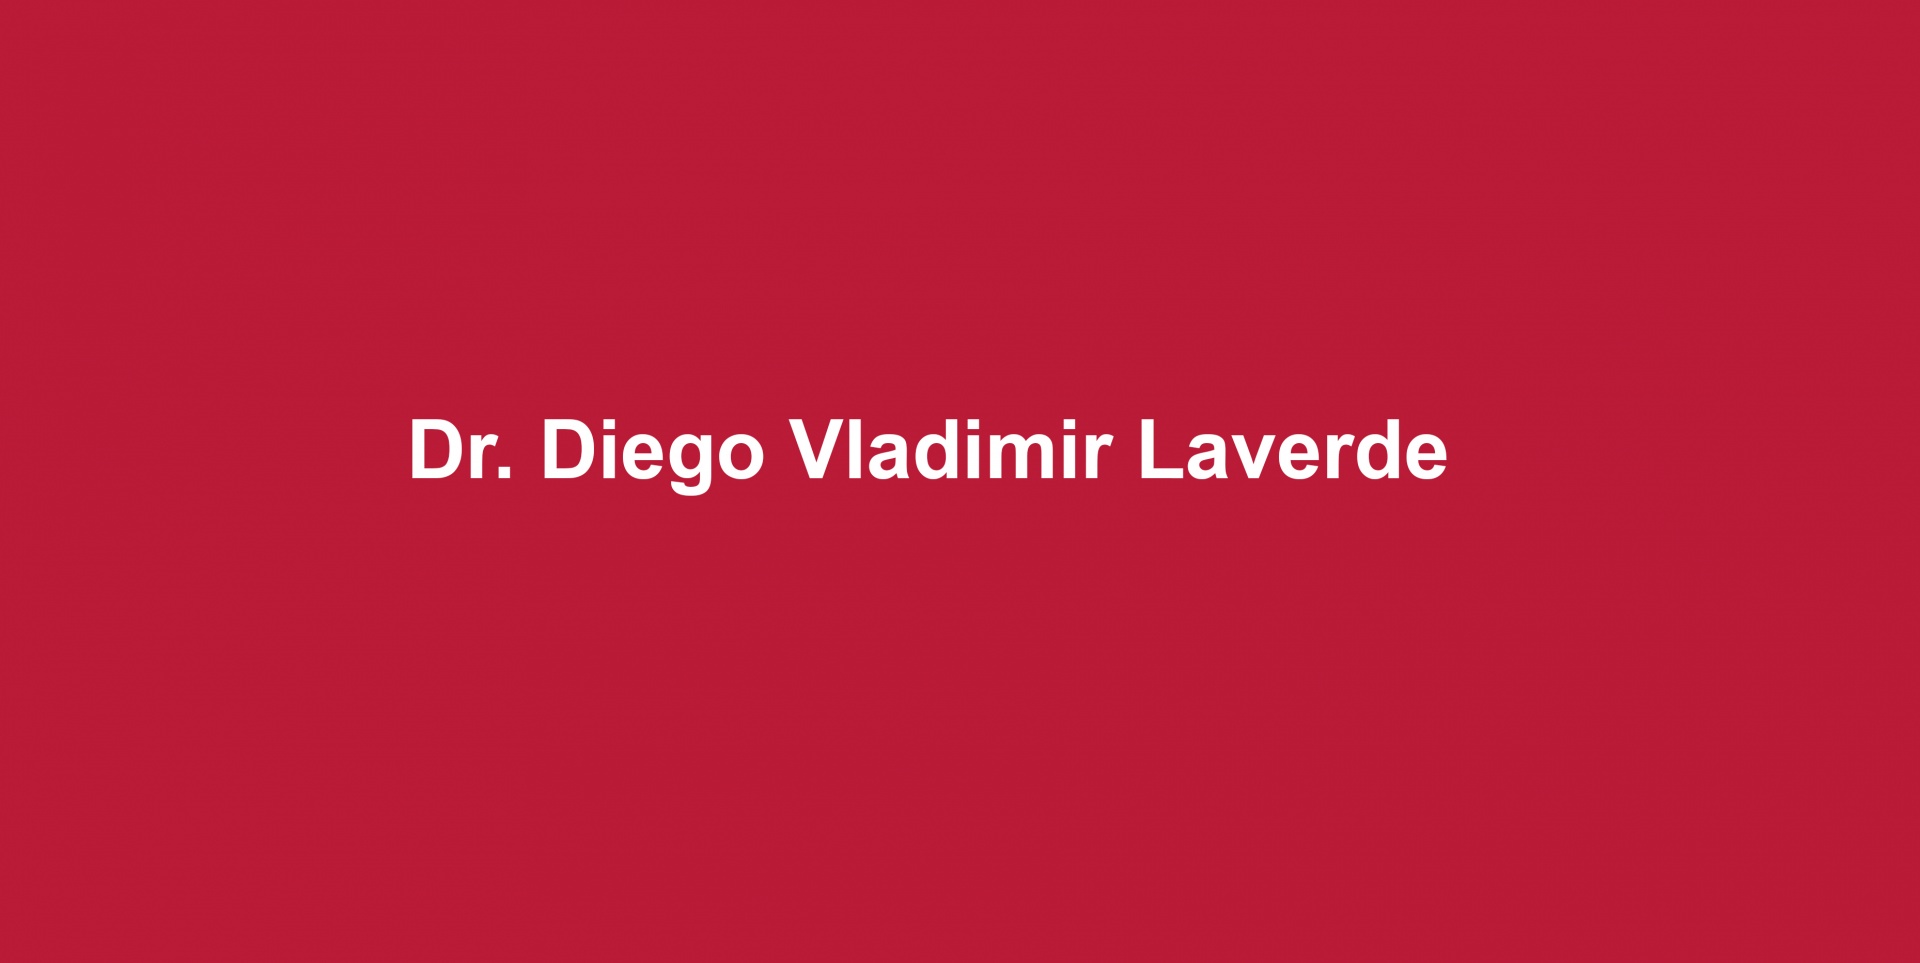 Dr. Diego Vladimir Laverde